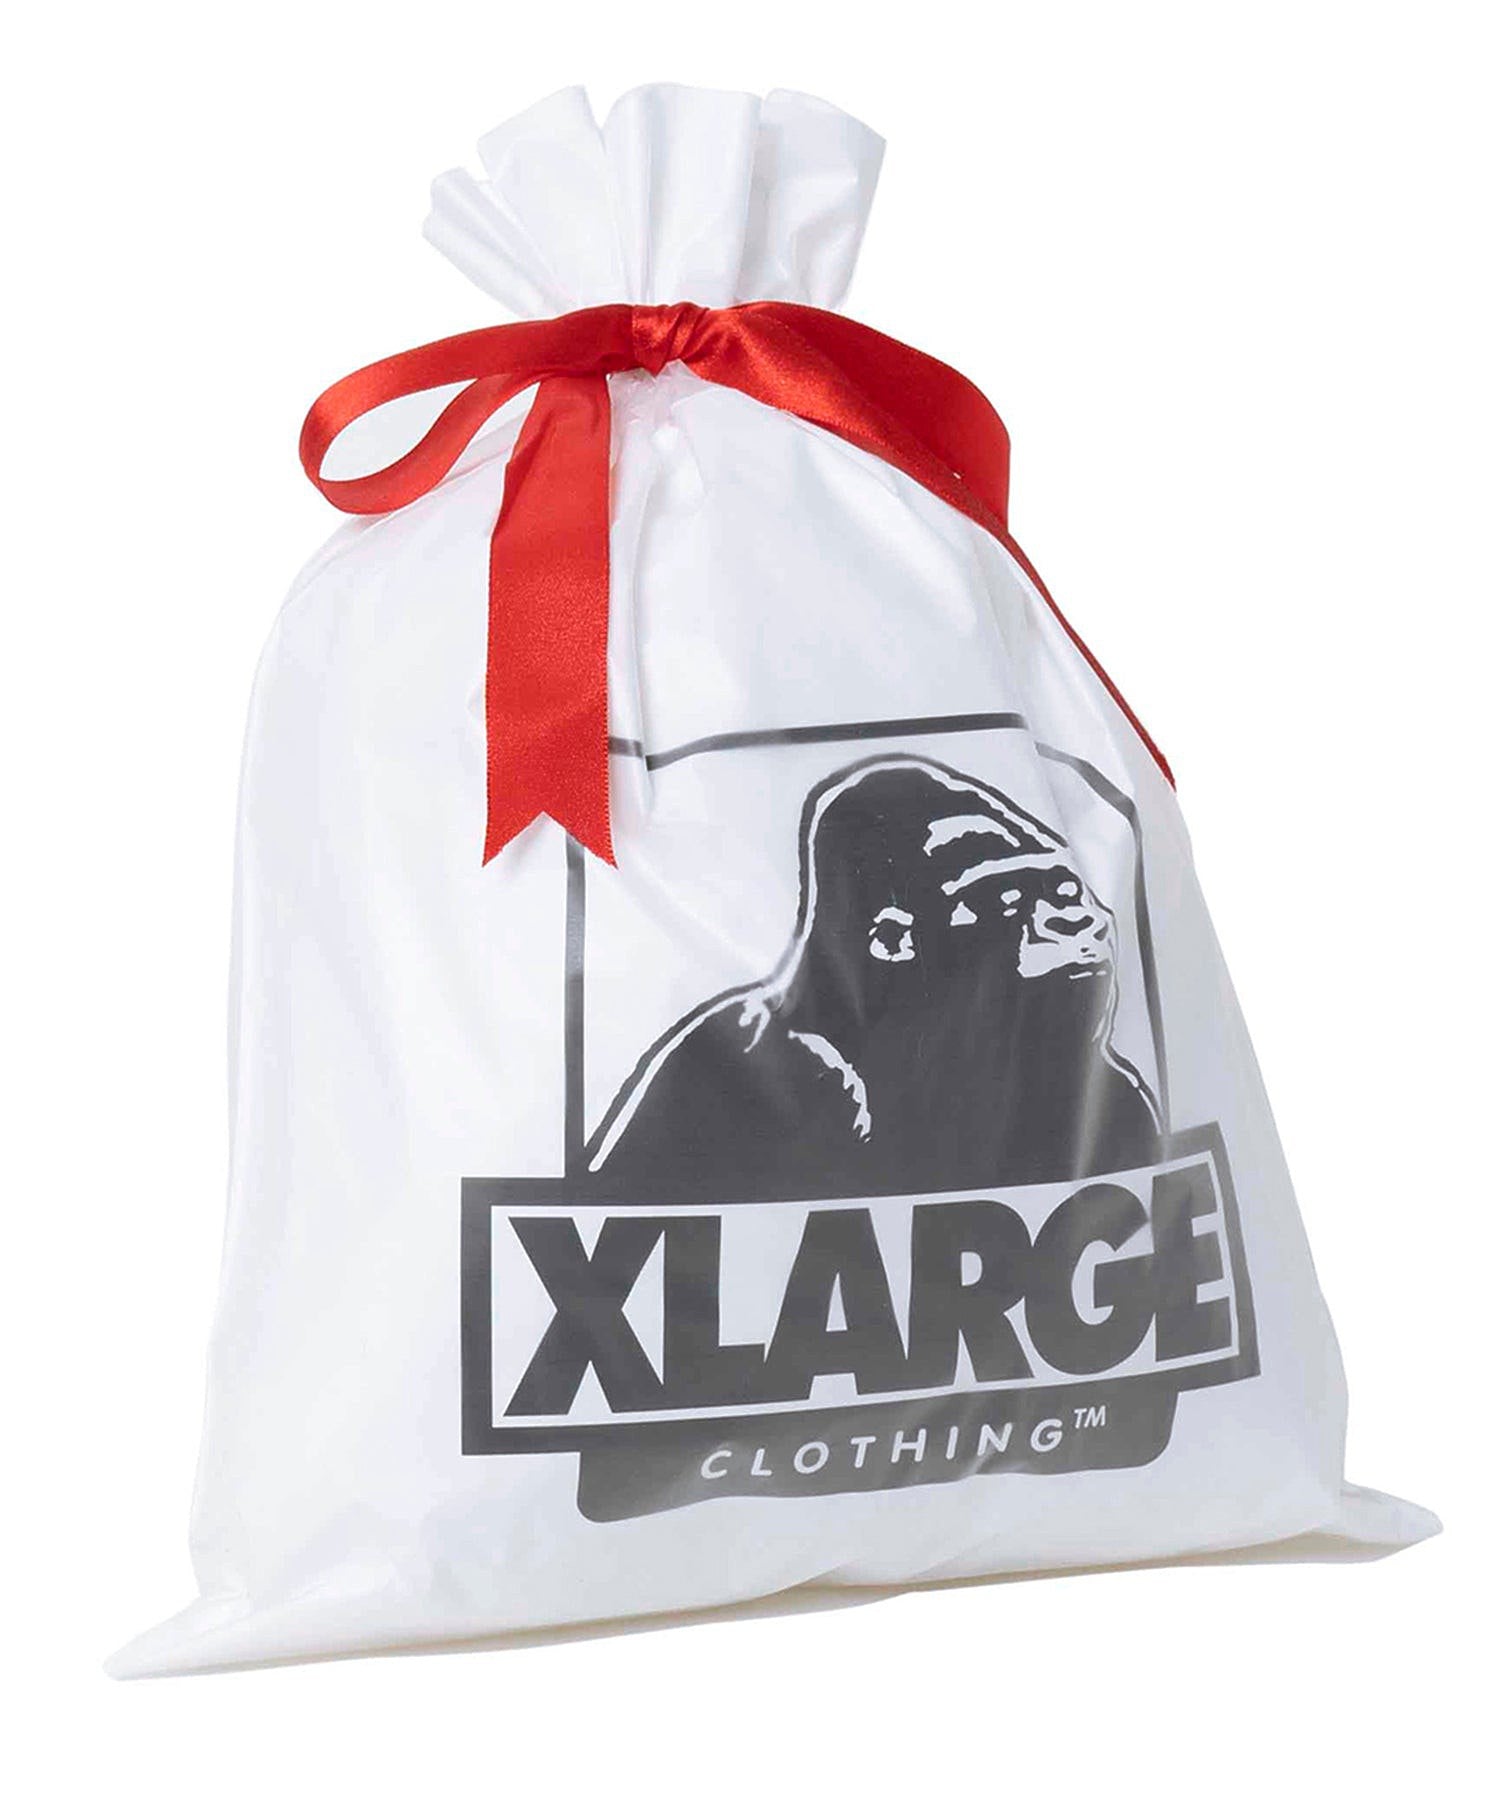 XL GIFT BAG SET CALIF(S)  XLARGE